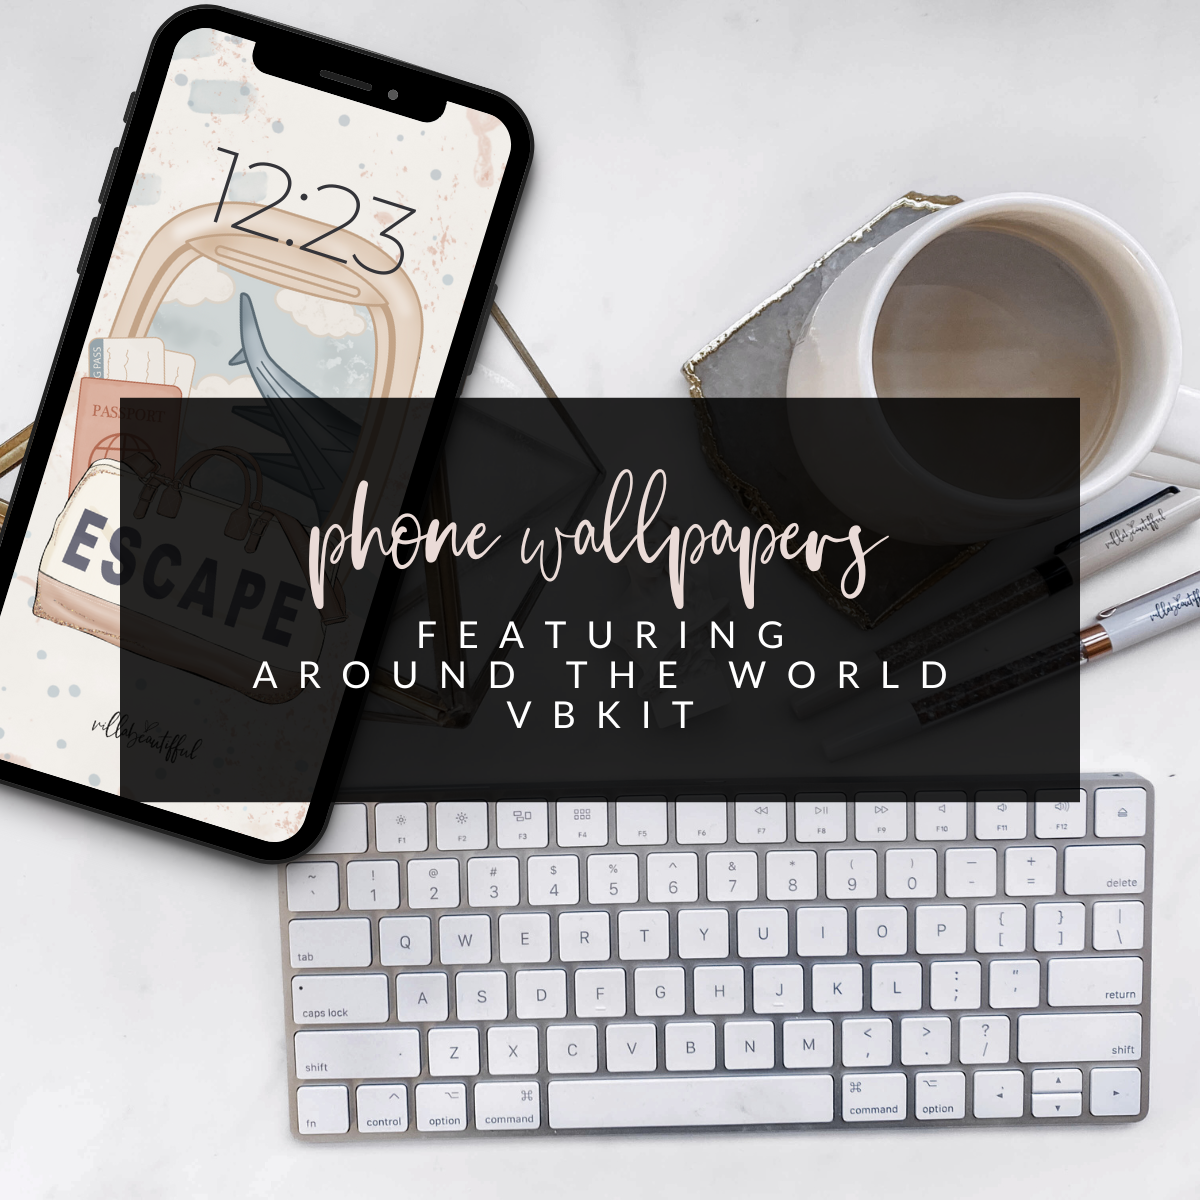 "Around the World" Phone Wallpapers